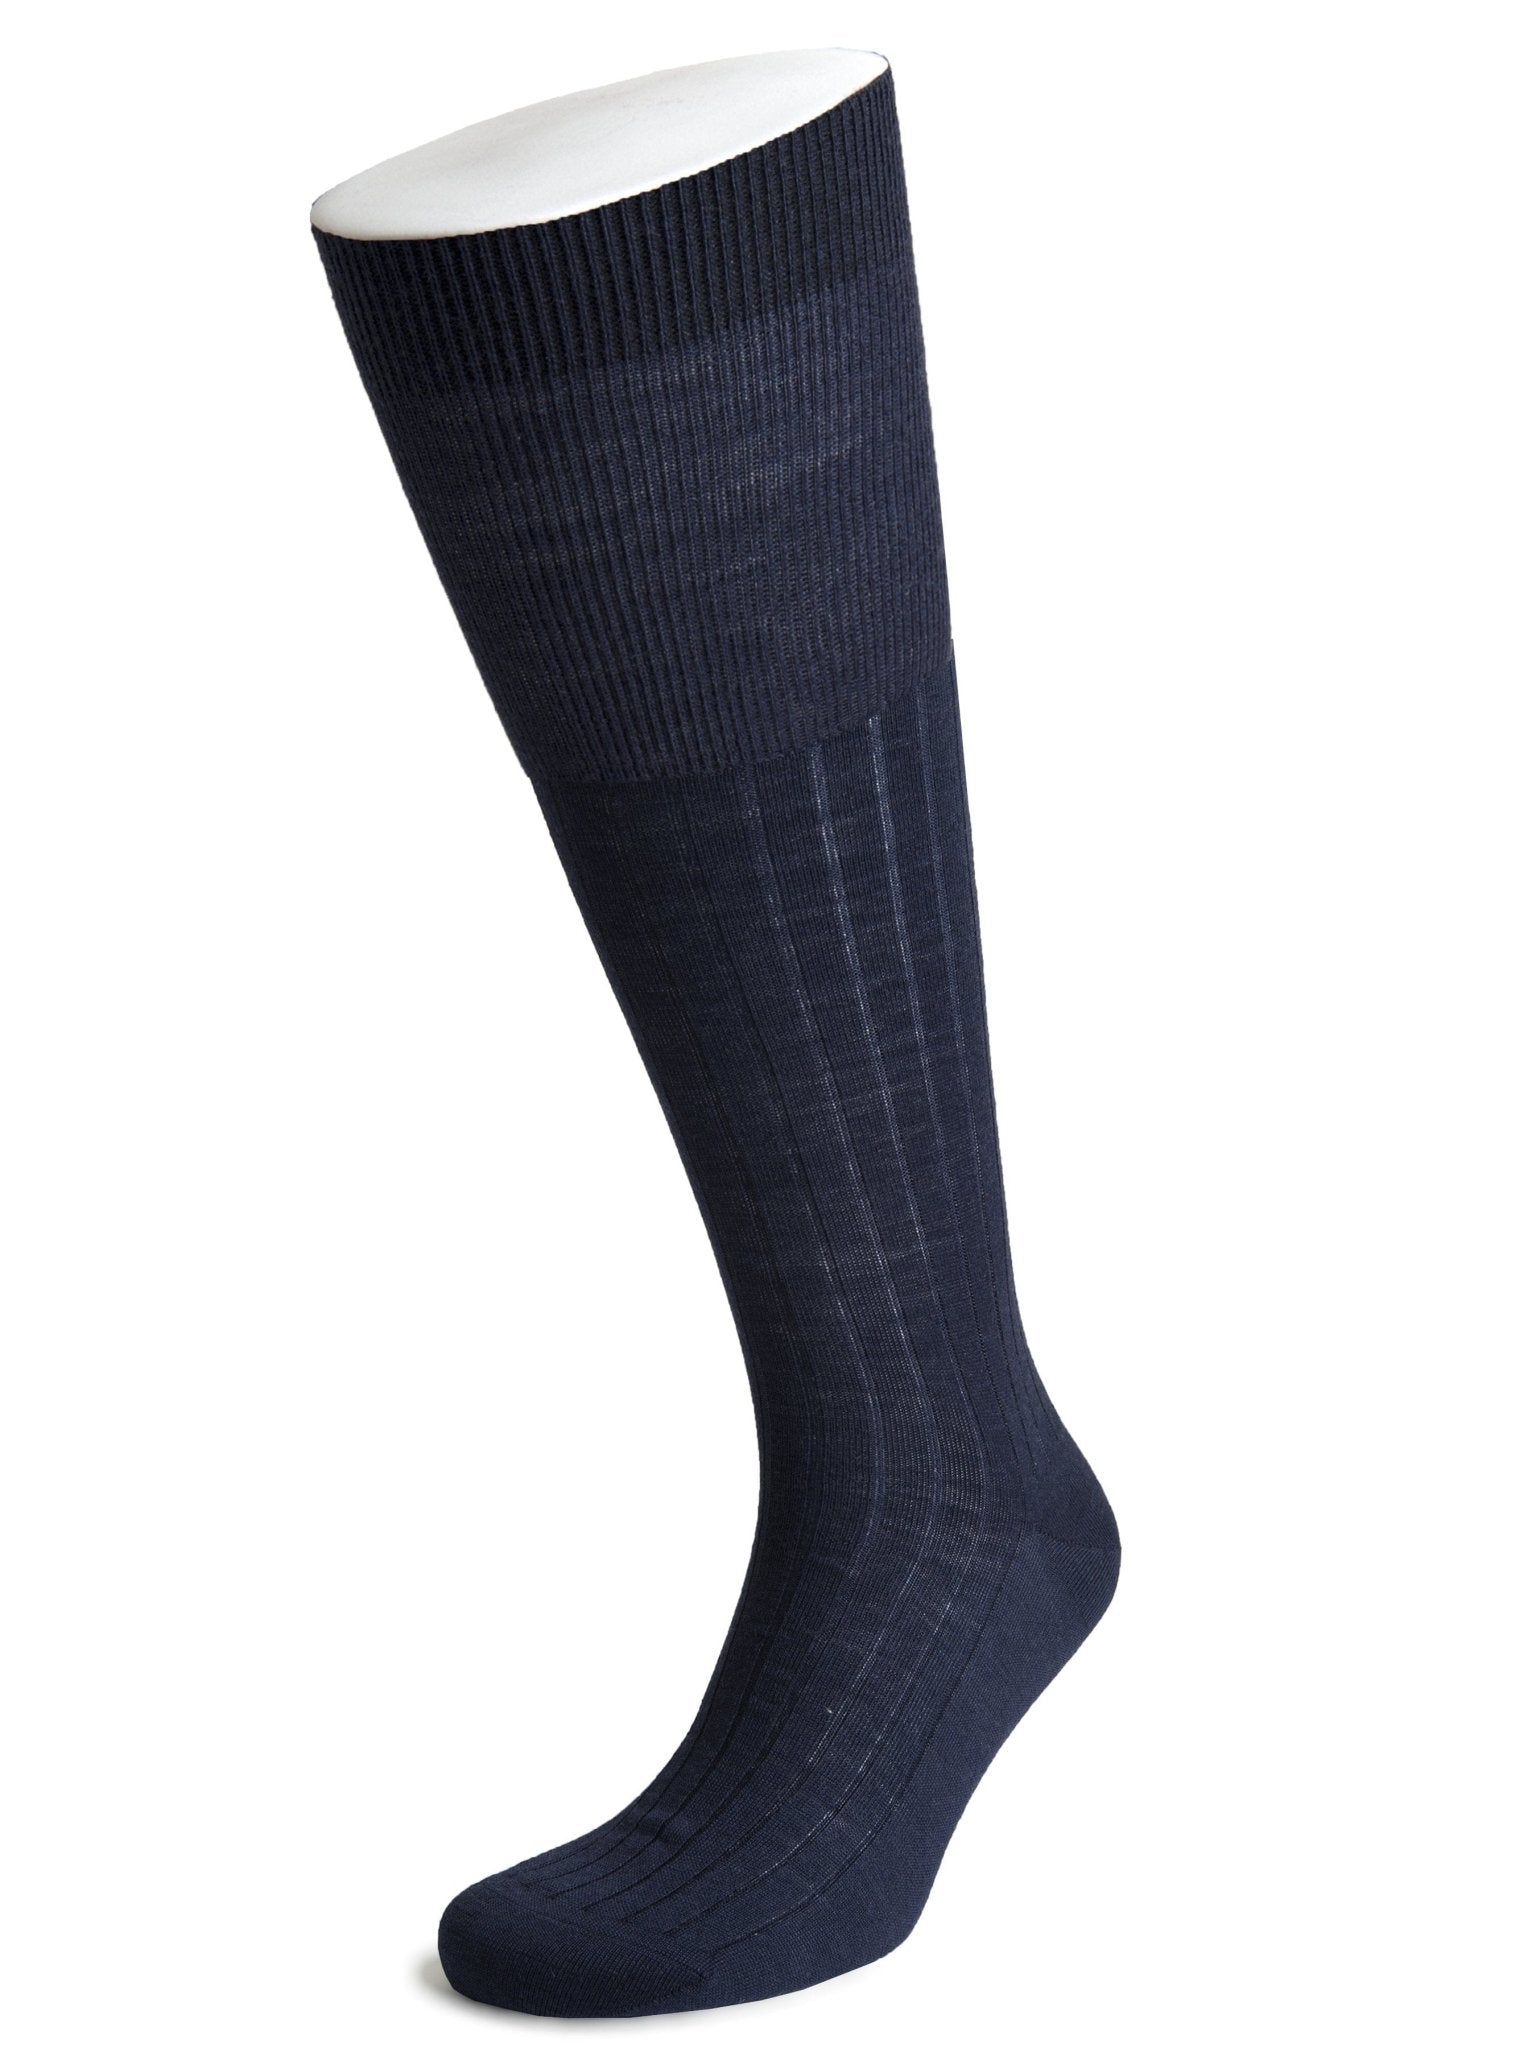 Long Navy Wool Socks